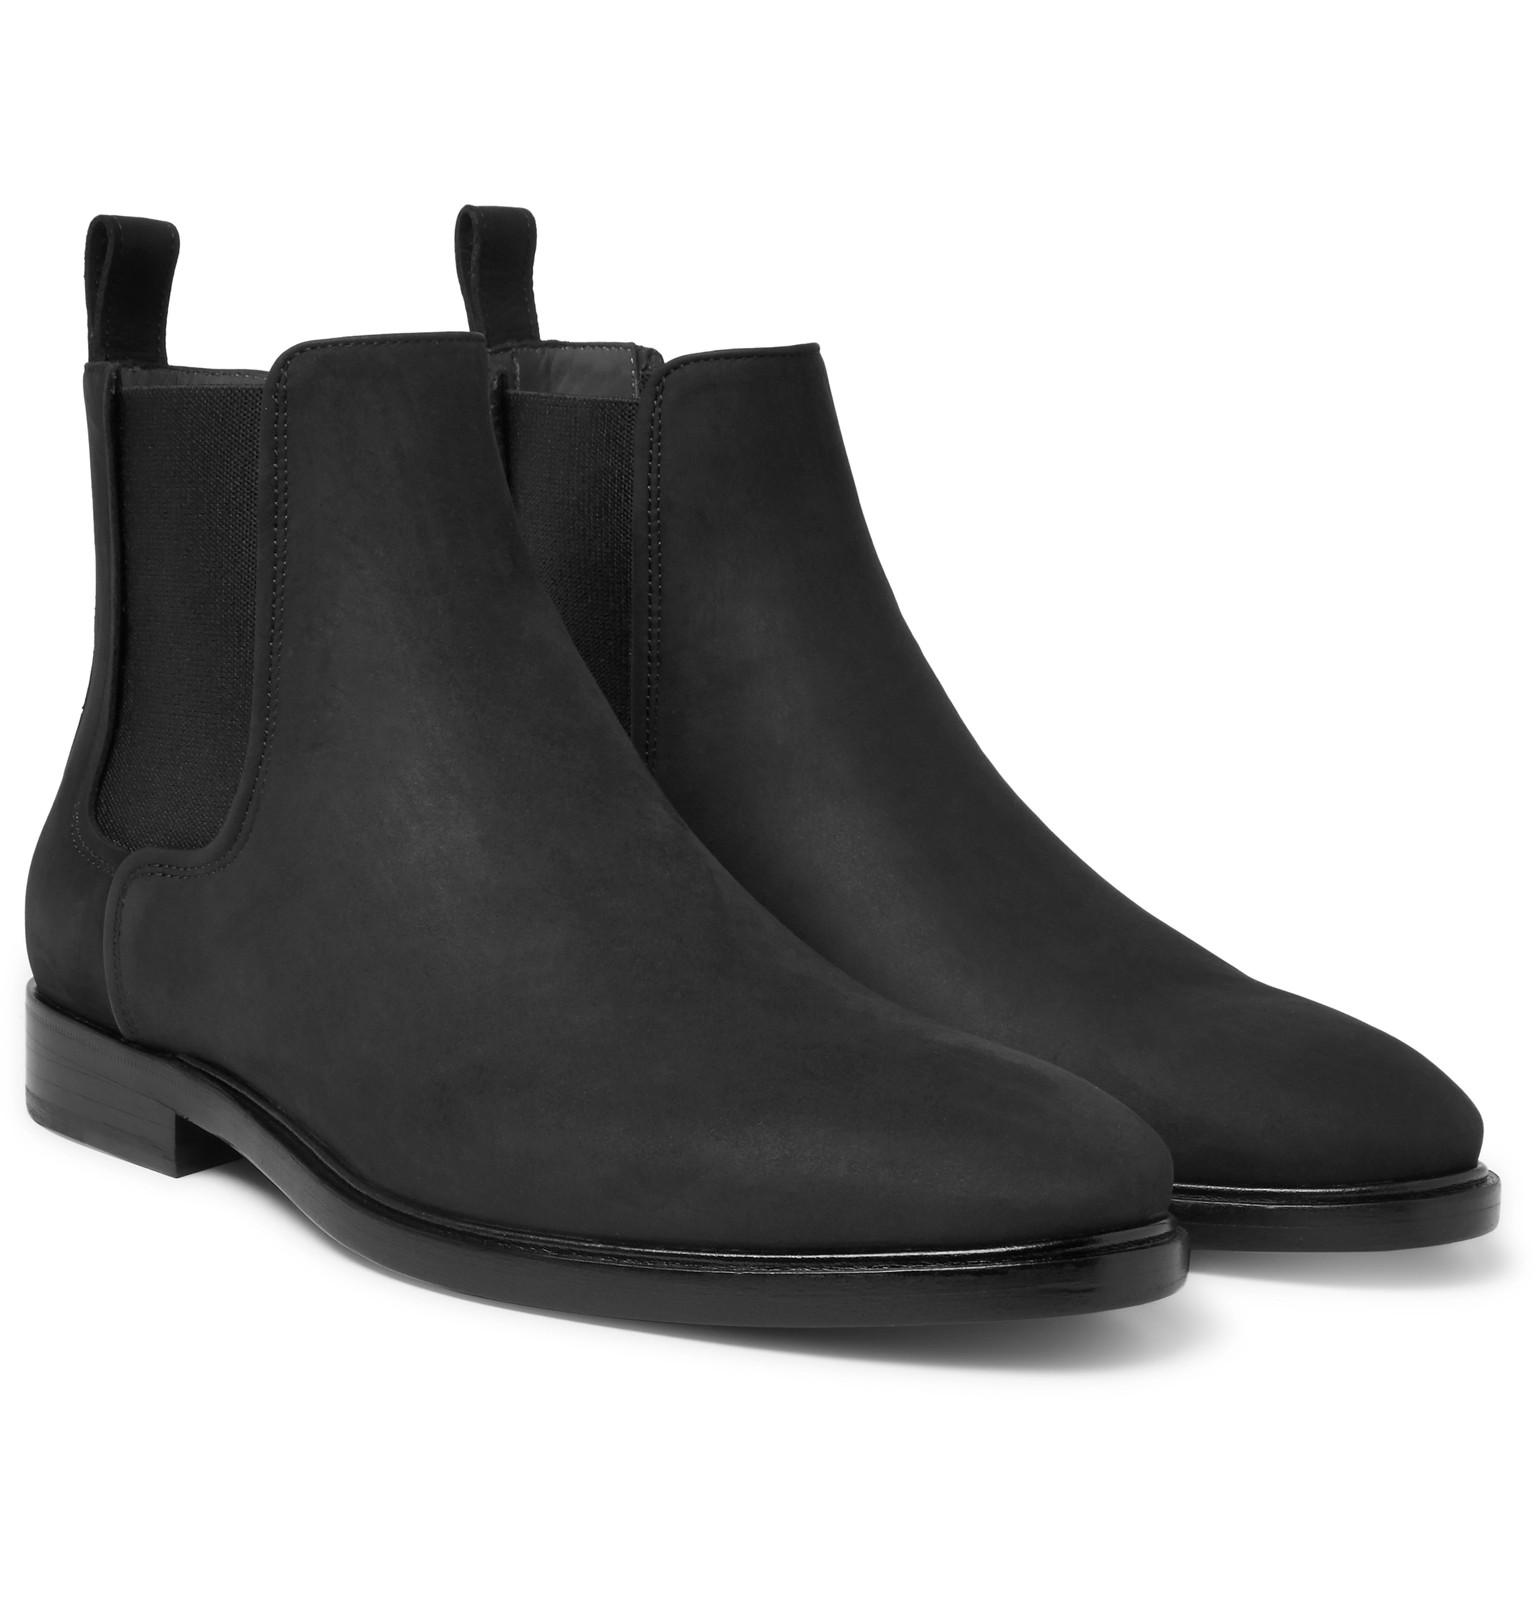 Lanvin Nubuck Chelsea Boots in Black for Men - Lyst